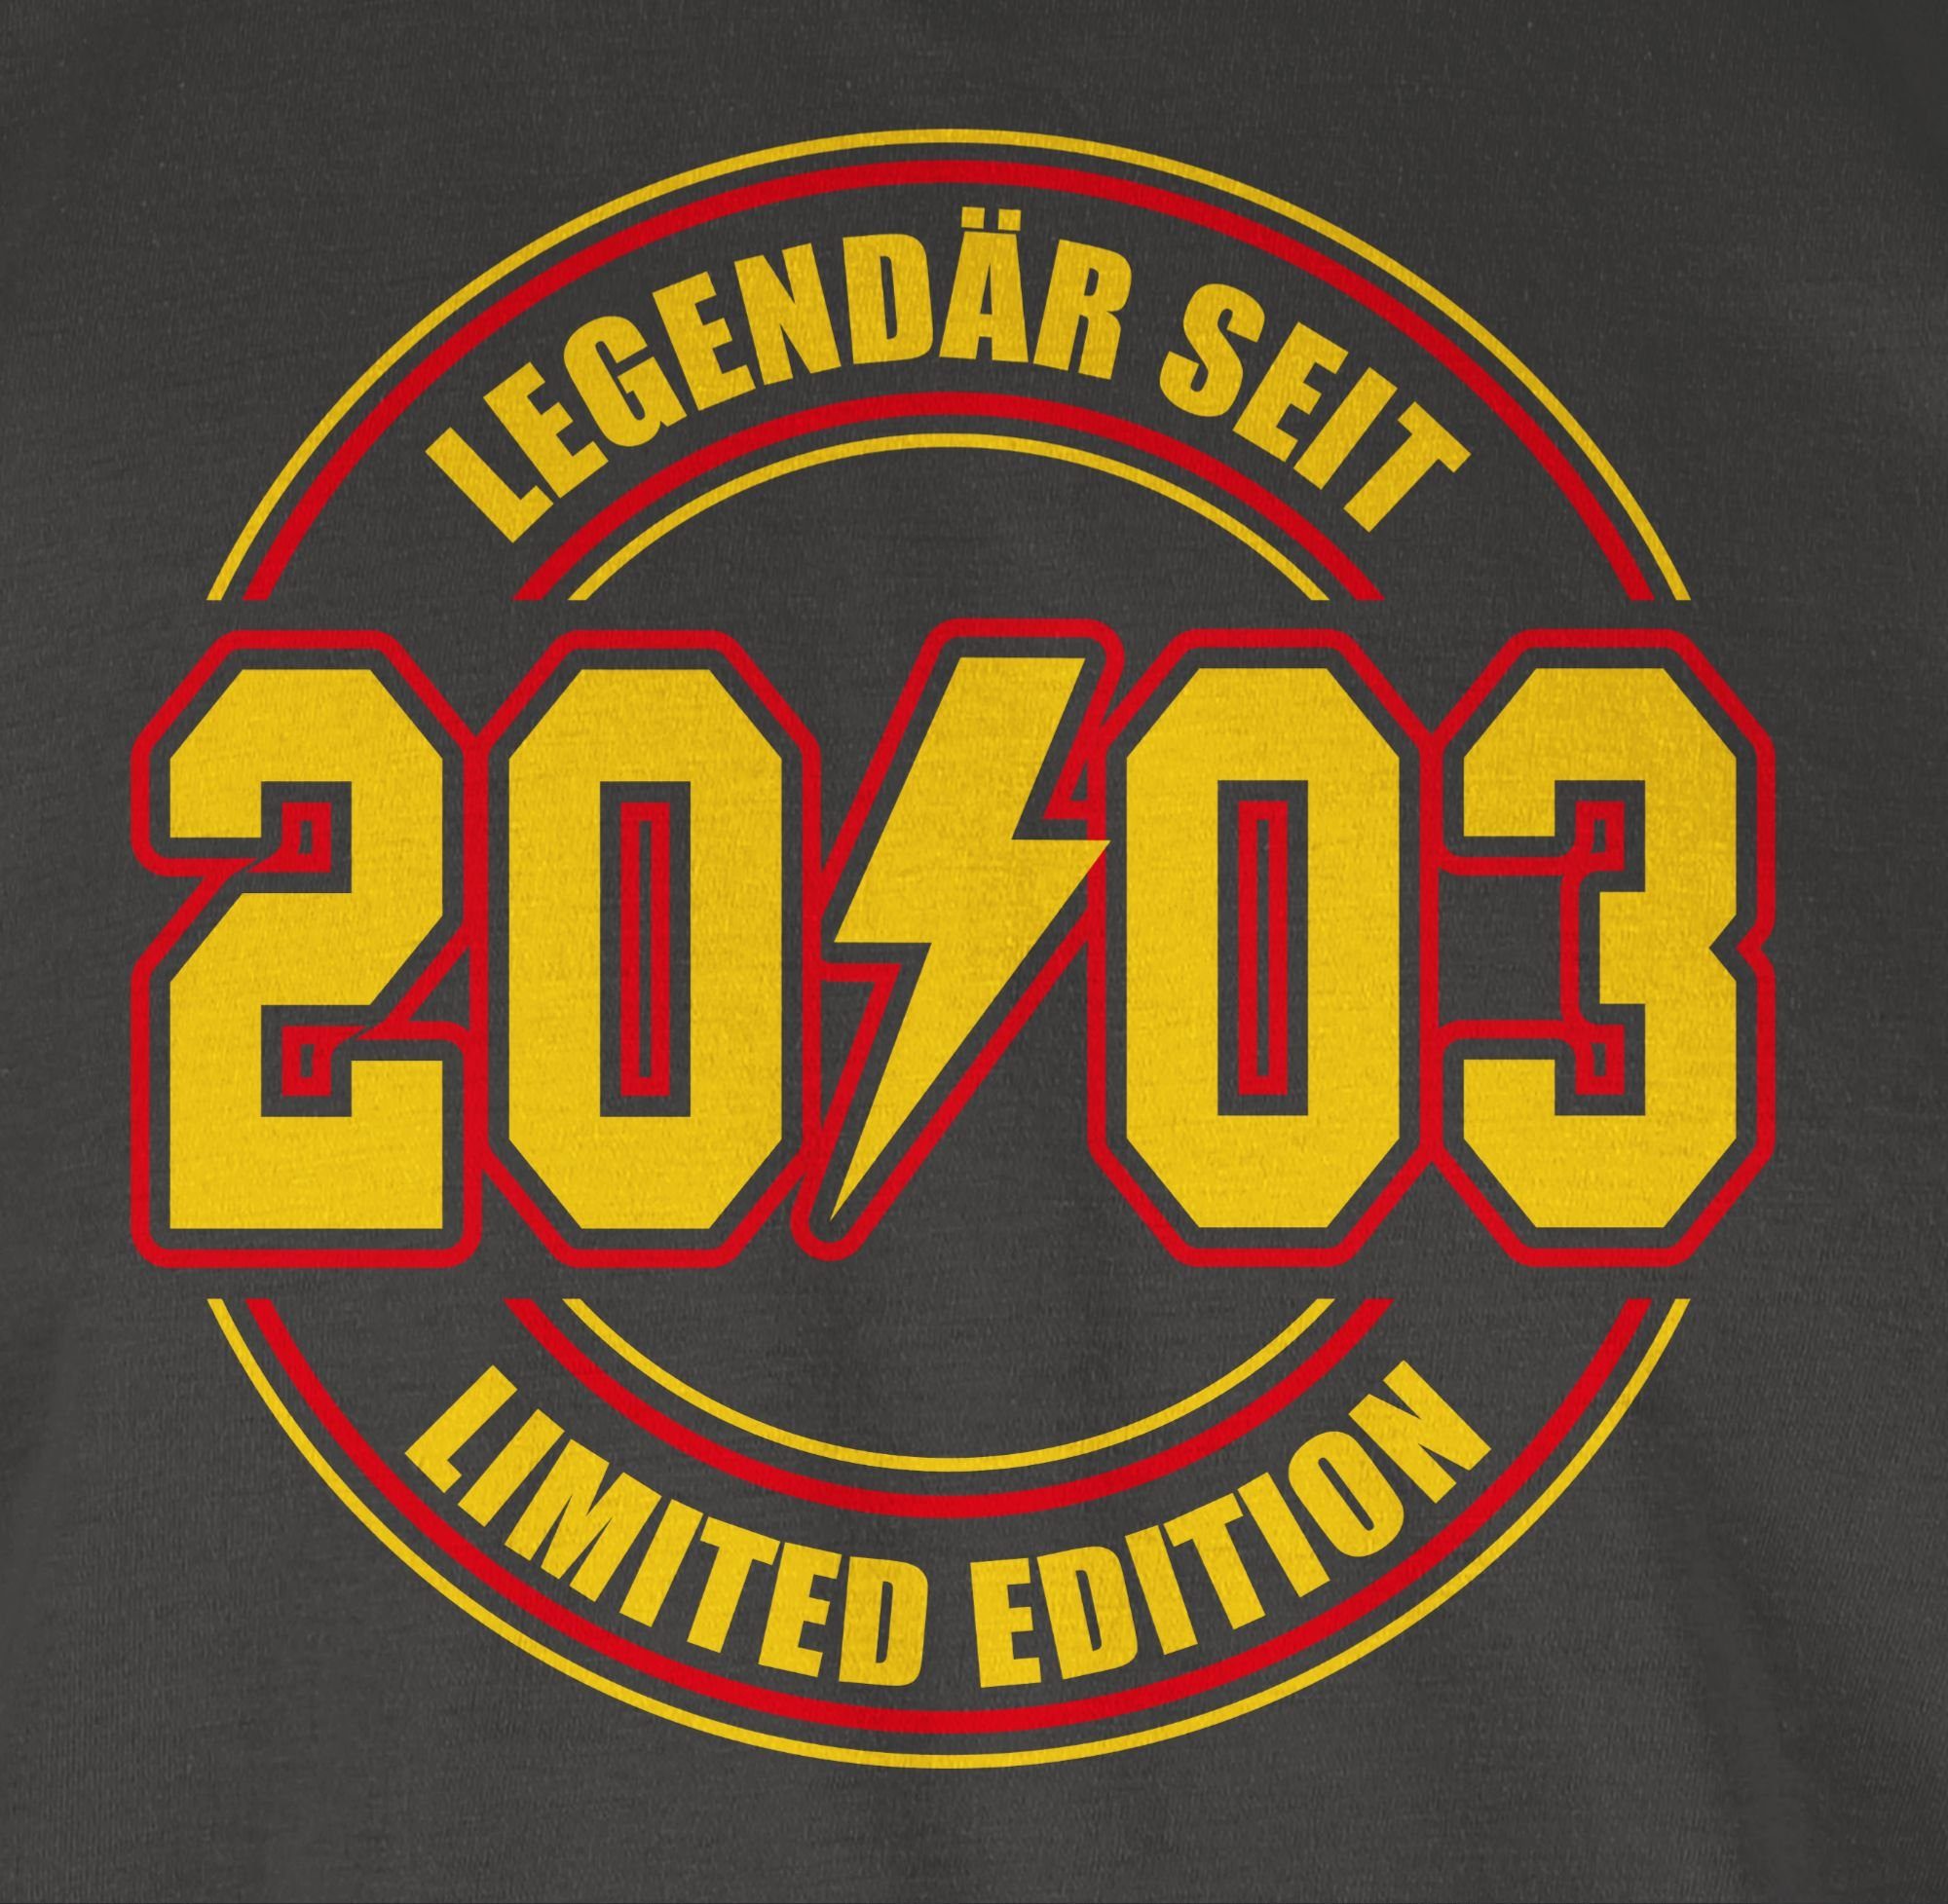 Limited 02 Edition seit 20. Dunkelgrau Geburtstag 2003 Legendär Shirtracer T-Shirt